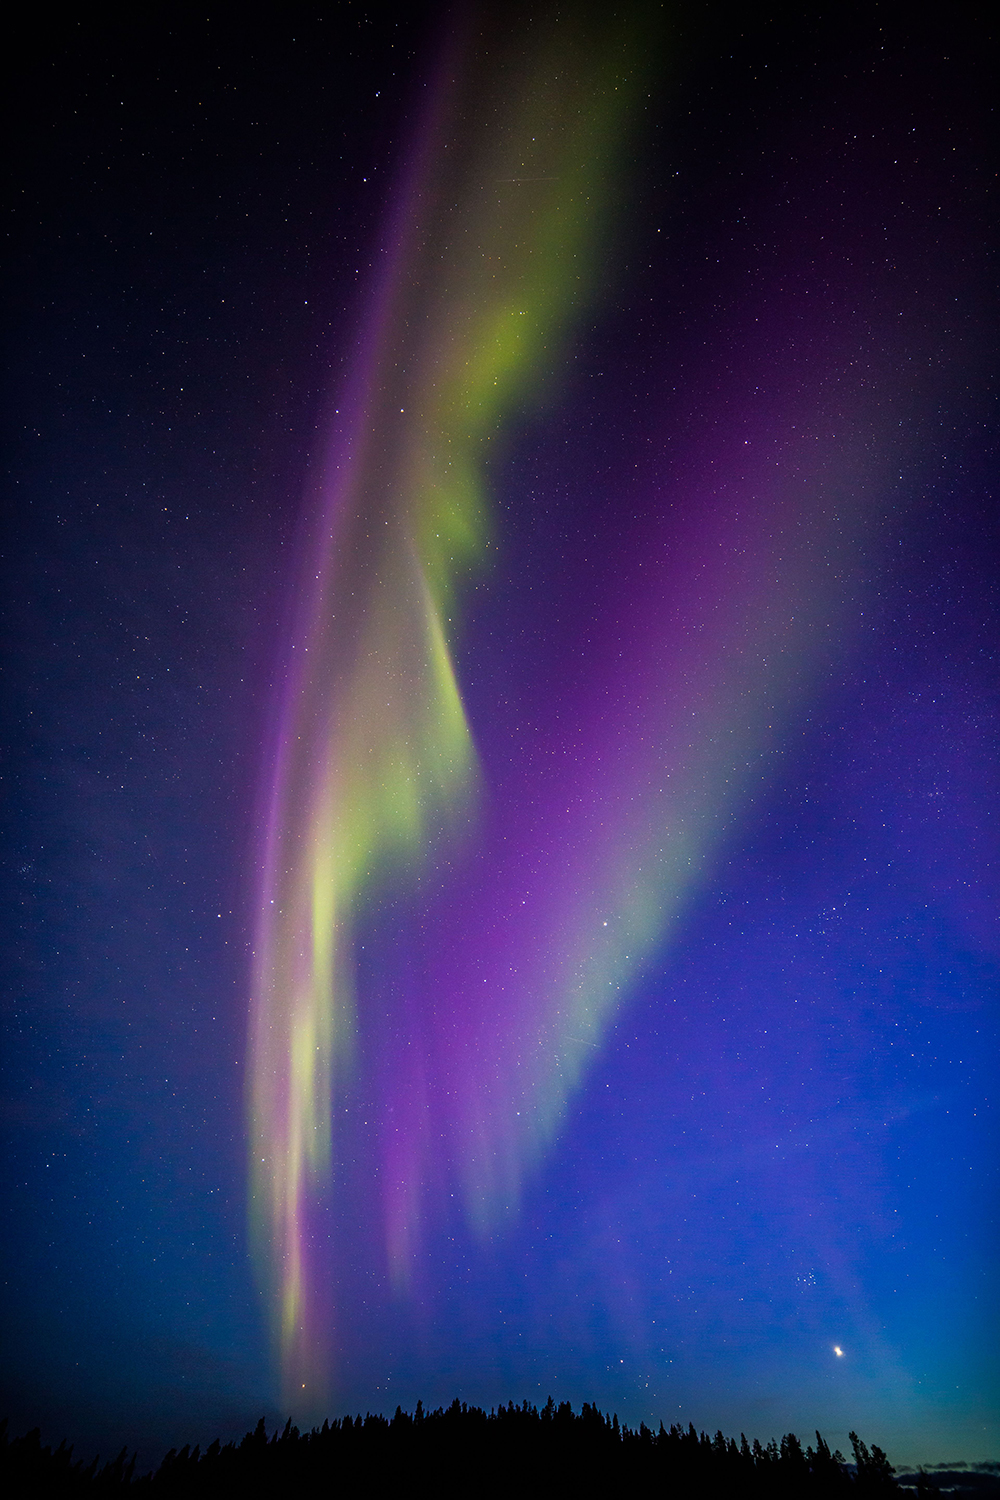 File:Moon and Aurora.jpg - Wikipedia